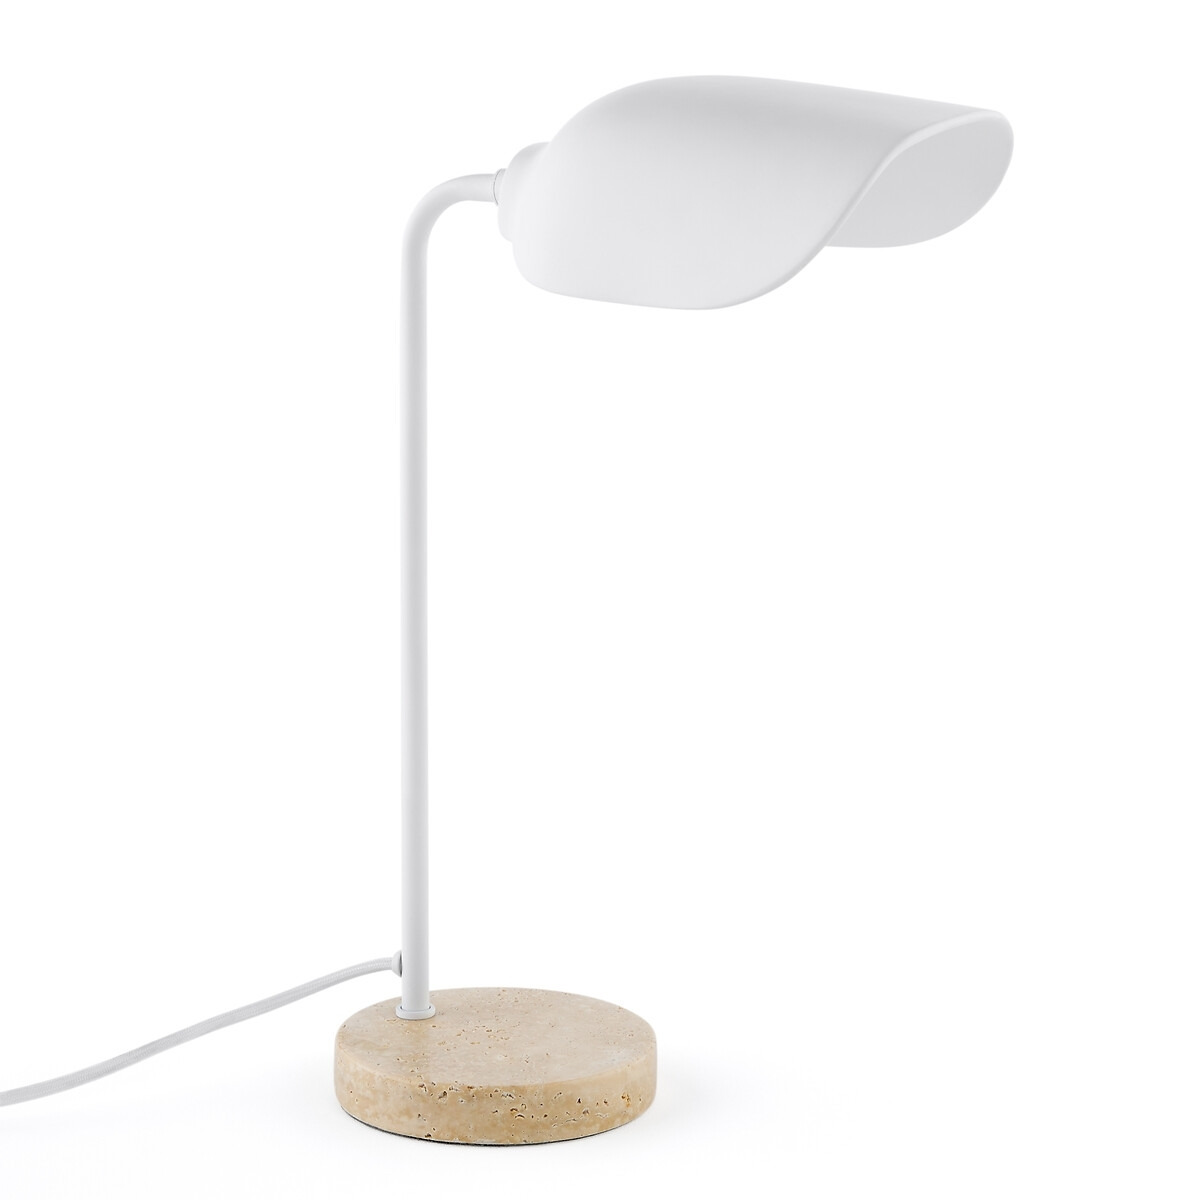 Perlata Ceramic and Travertine Table Lamp - image 1